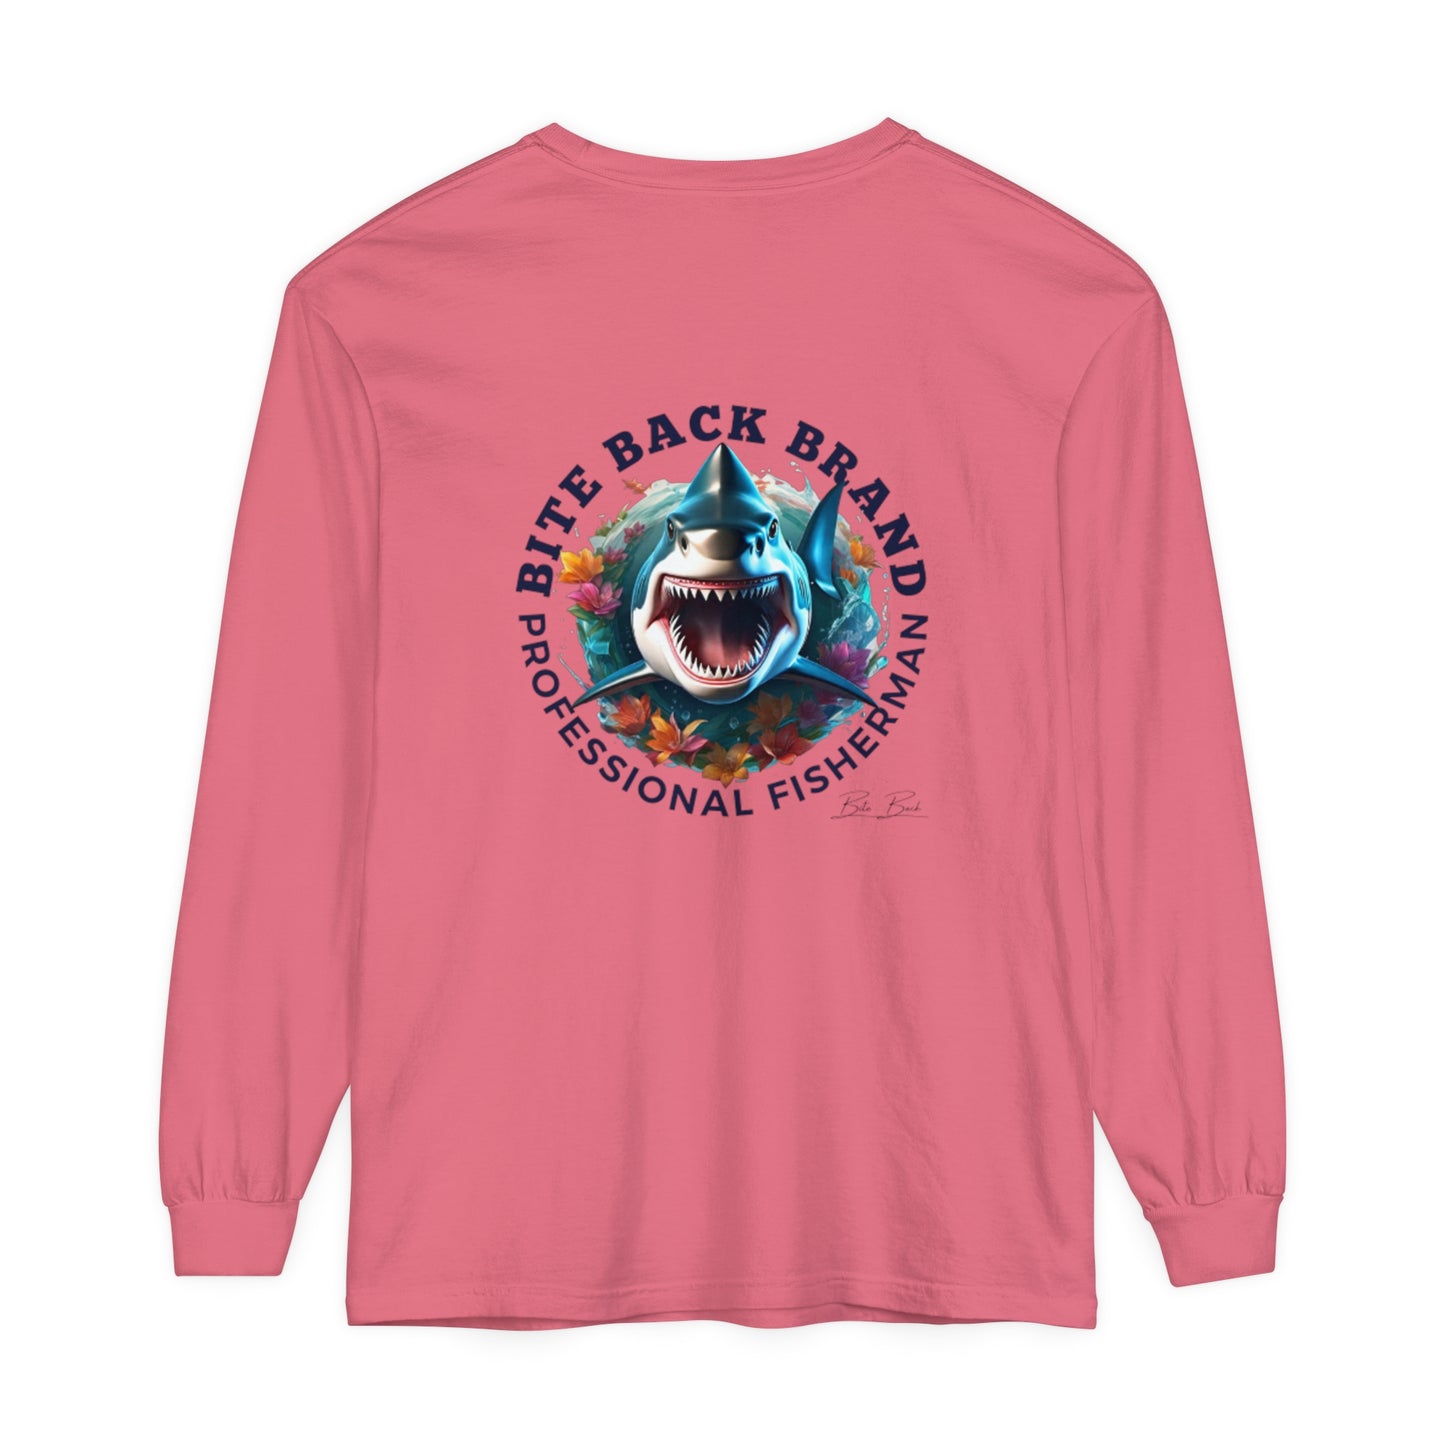 Professional Fisherman Unisex Garment-dyed Long Sleeve T-Shirt